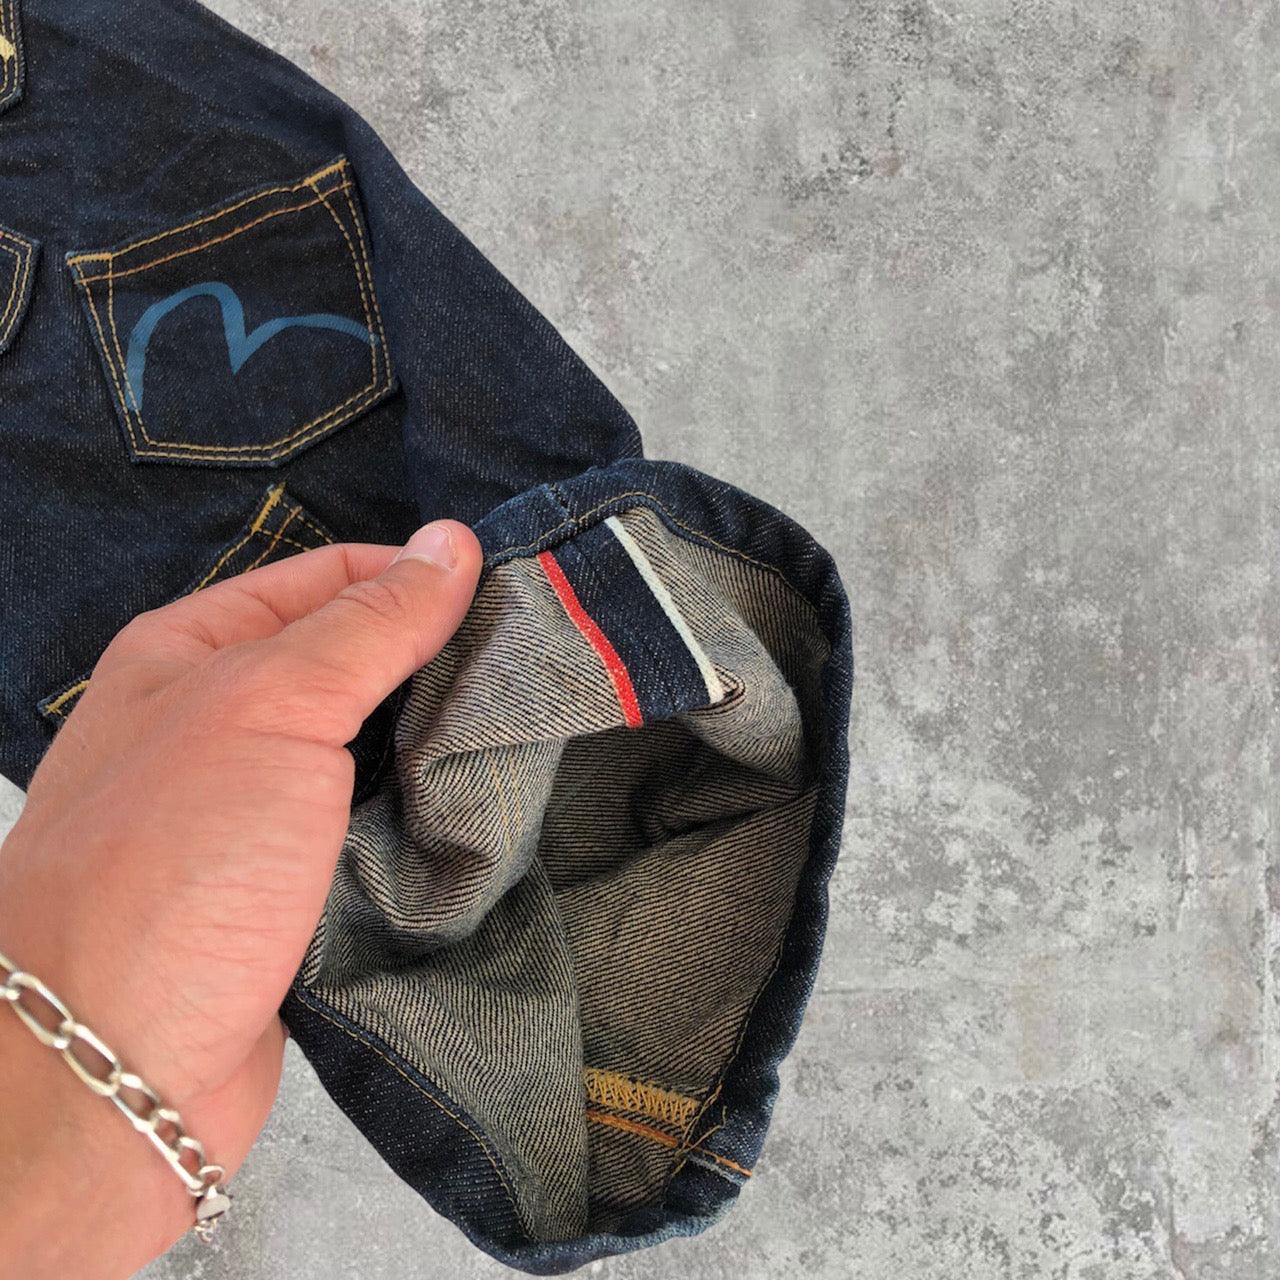 Rare Evisu Multipocket Jeans - Known Source